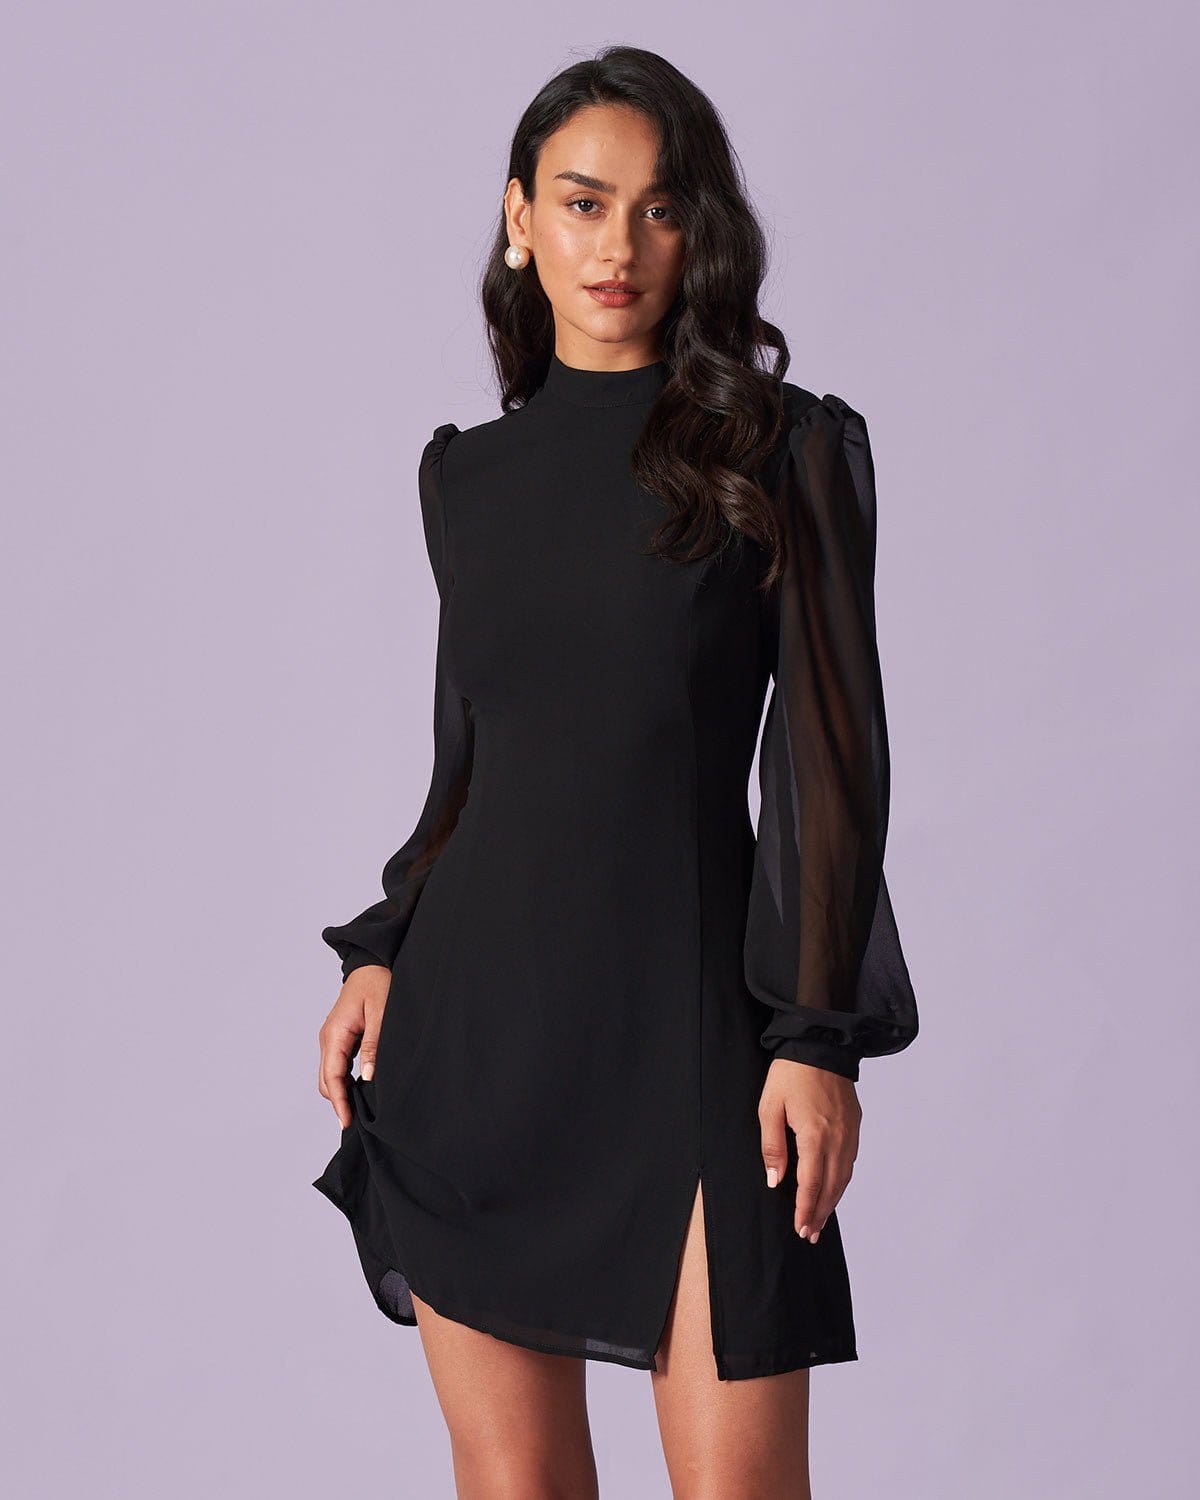 The Black Stand Collar Sheer Slit Mini Dress